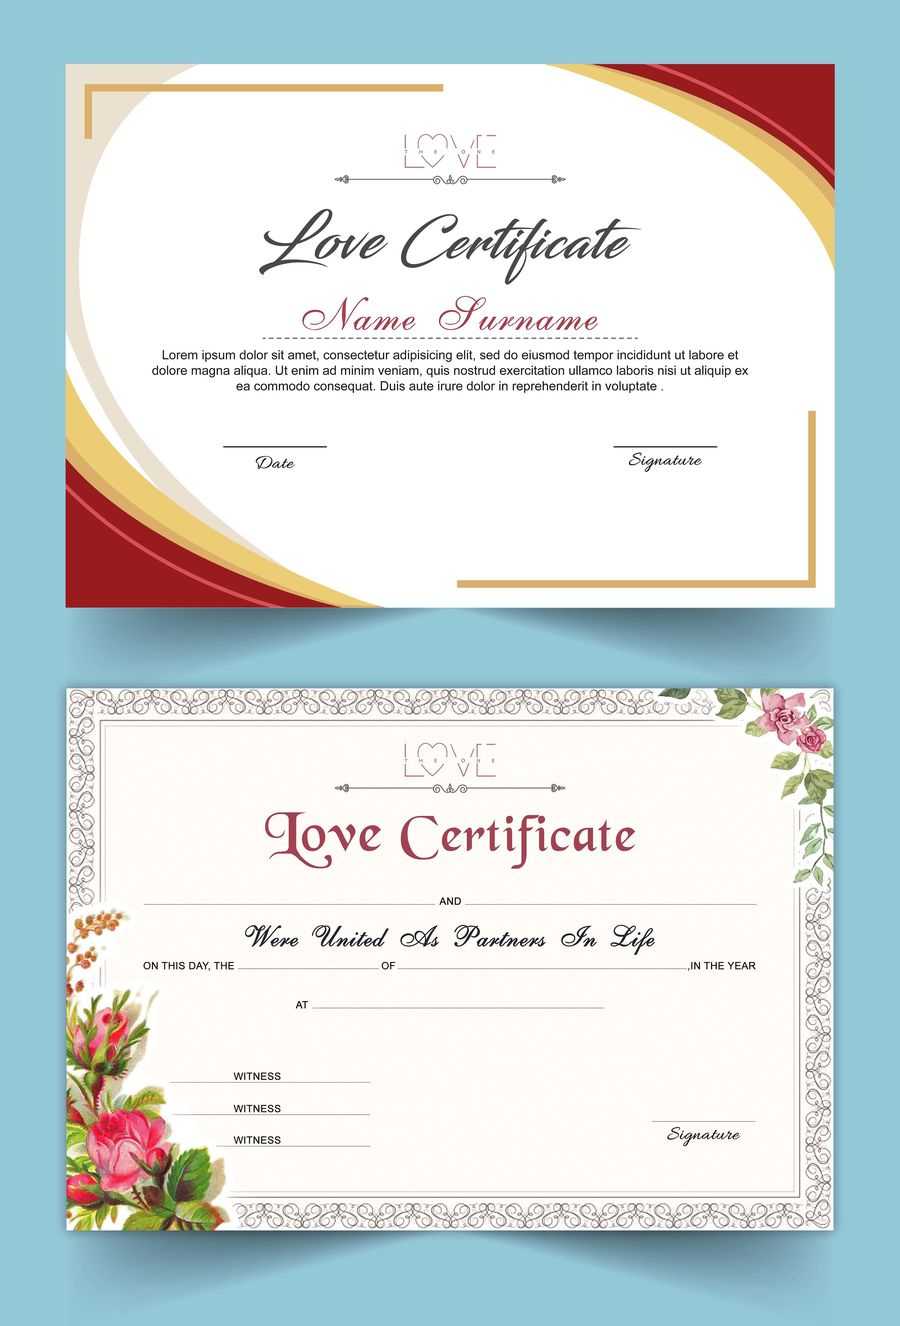 Entry #15Satishandsurabhi For Design A Love Certificate Pertaining To Love Certificate Templates